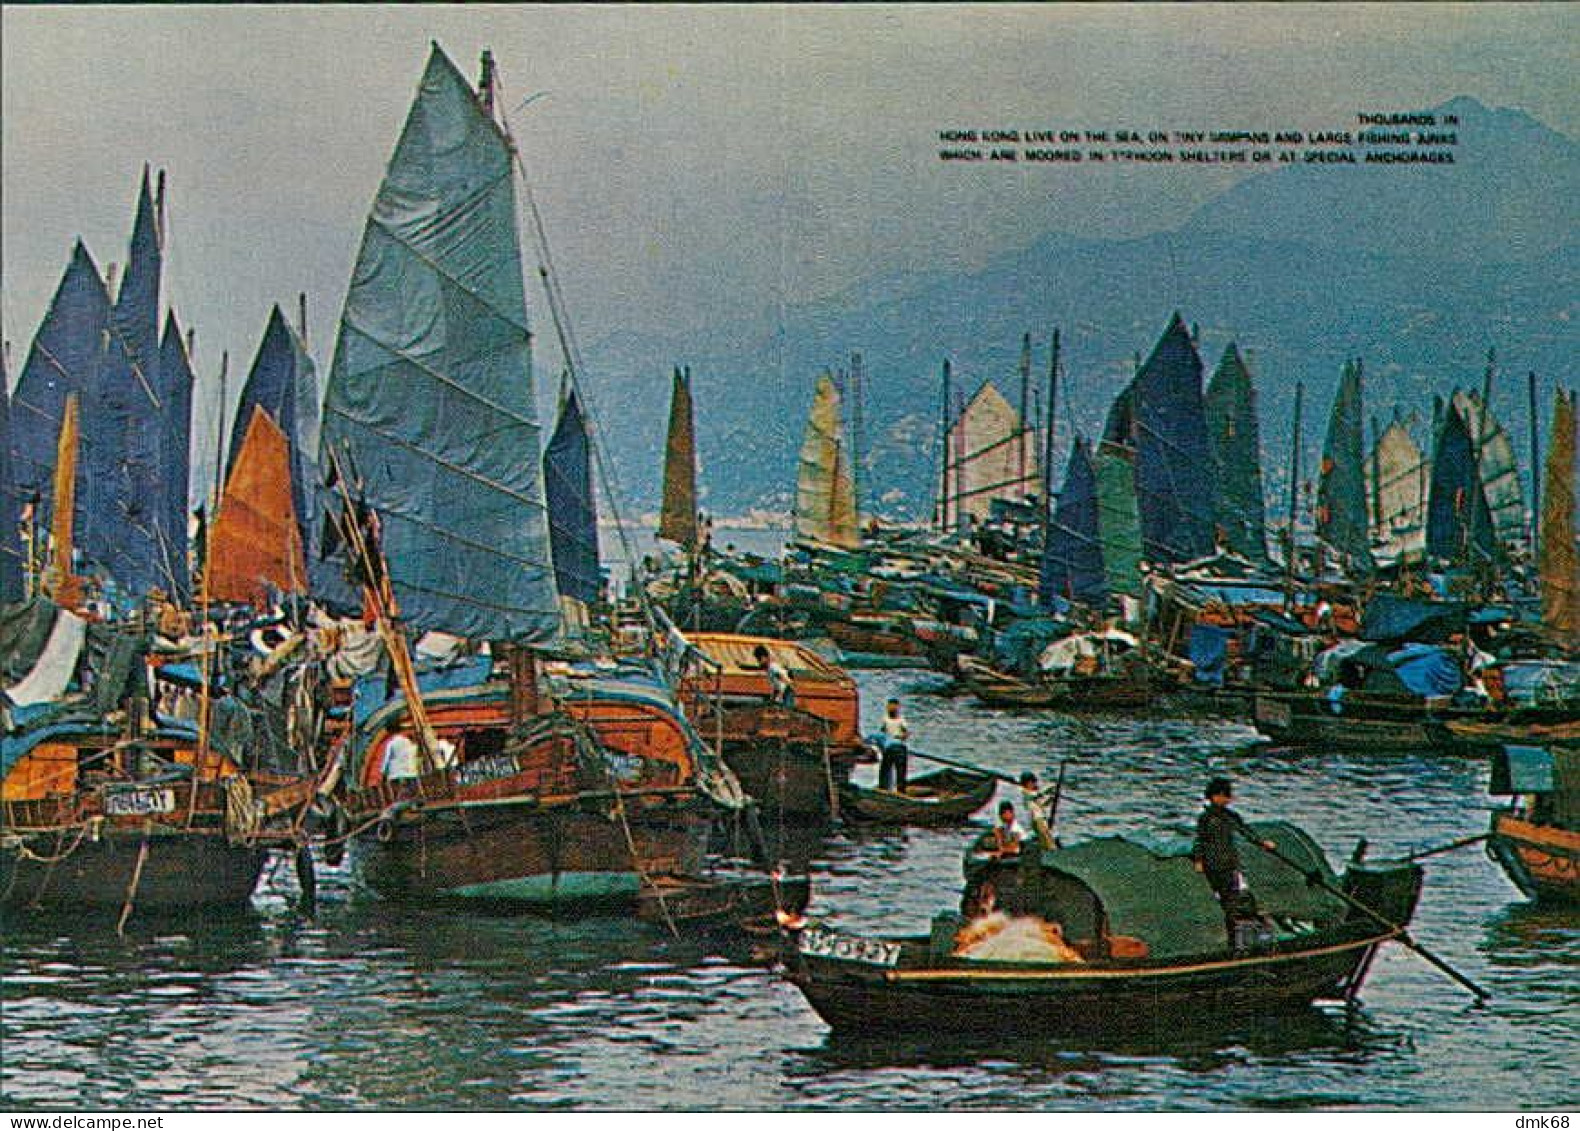 CHINA -  HONG KONG - 28 VINTAGE H.K. POSTCARDS + FOLDER - PUB. BY NATIONAL CO. 1970s (18372)